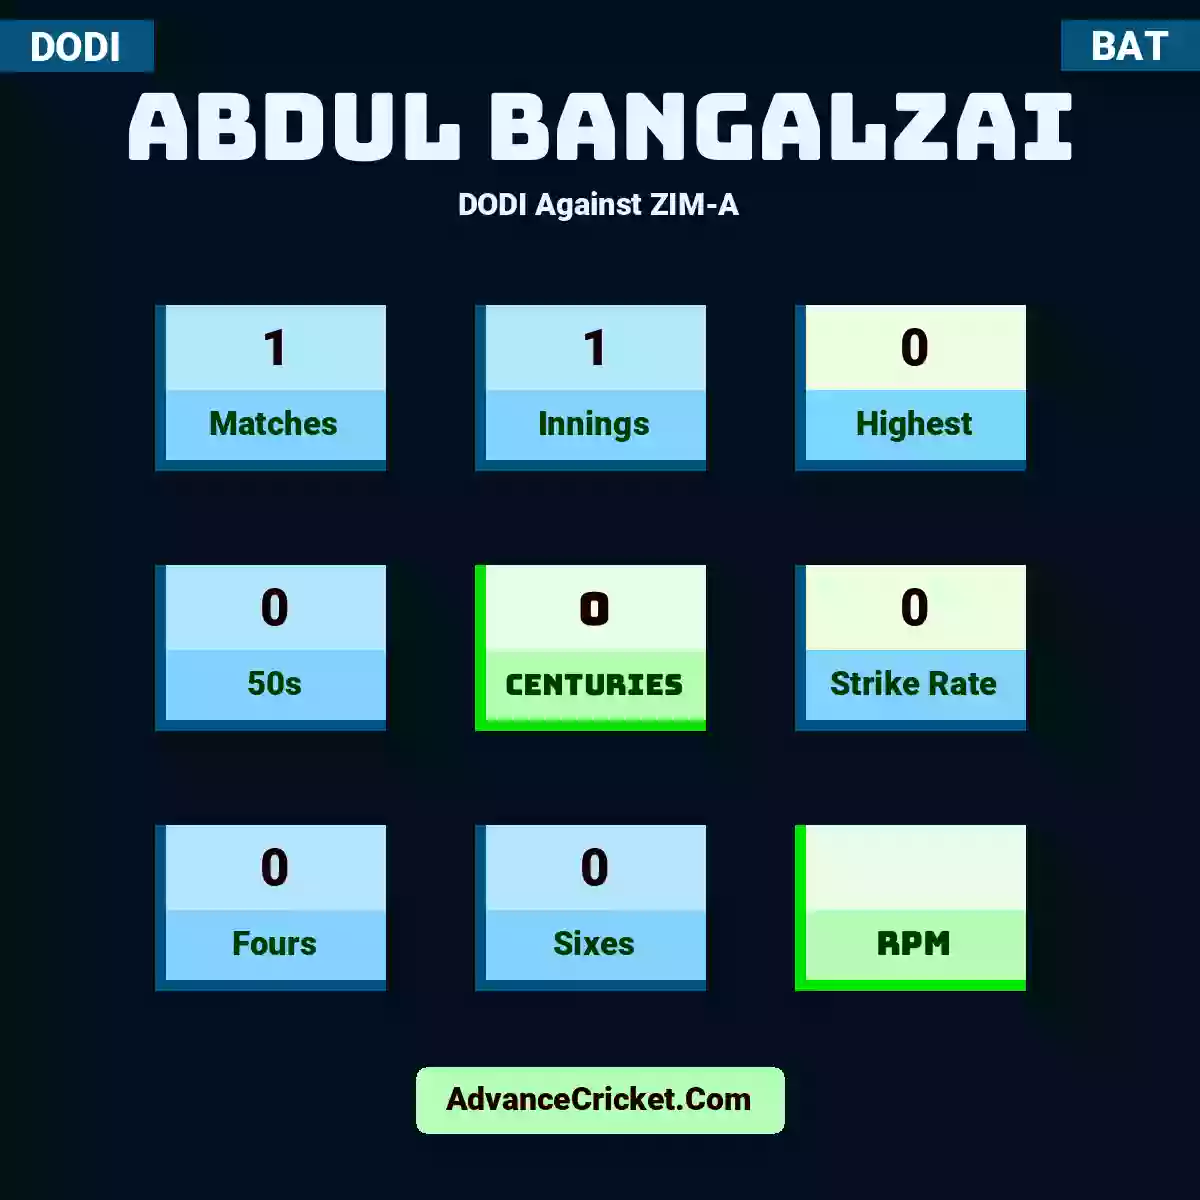 Abdul Bangalzai DODI  Against ZIM-A, Abdul Bangalzai played 1 matches, scored 0 runs as highest, 0 half-centuries, and 0 centuries, with a strike rate of 0. A.Bangalzai hit 0 fours and 0 sixes.